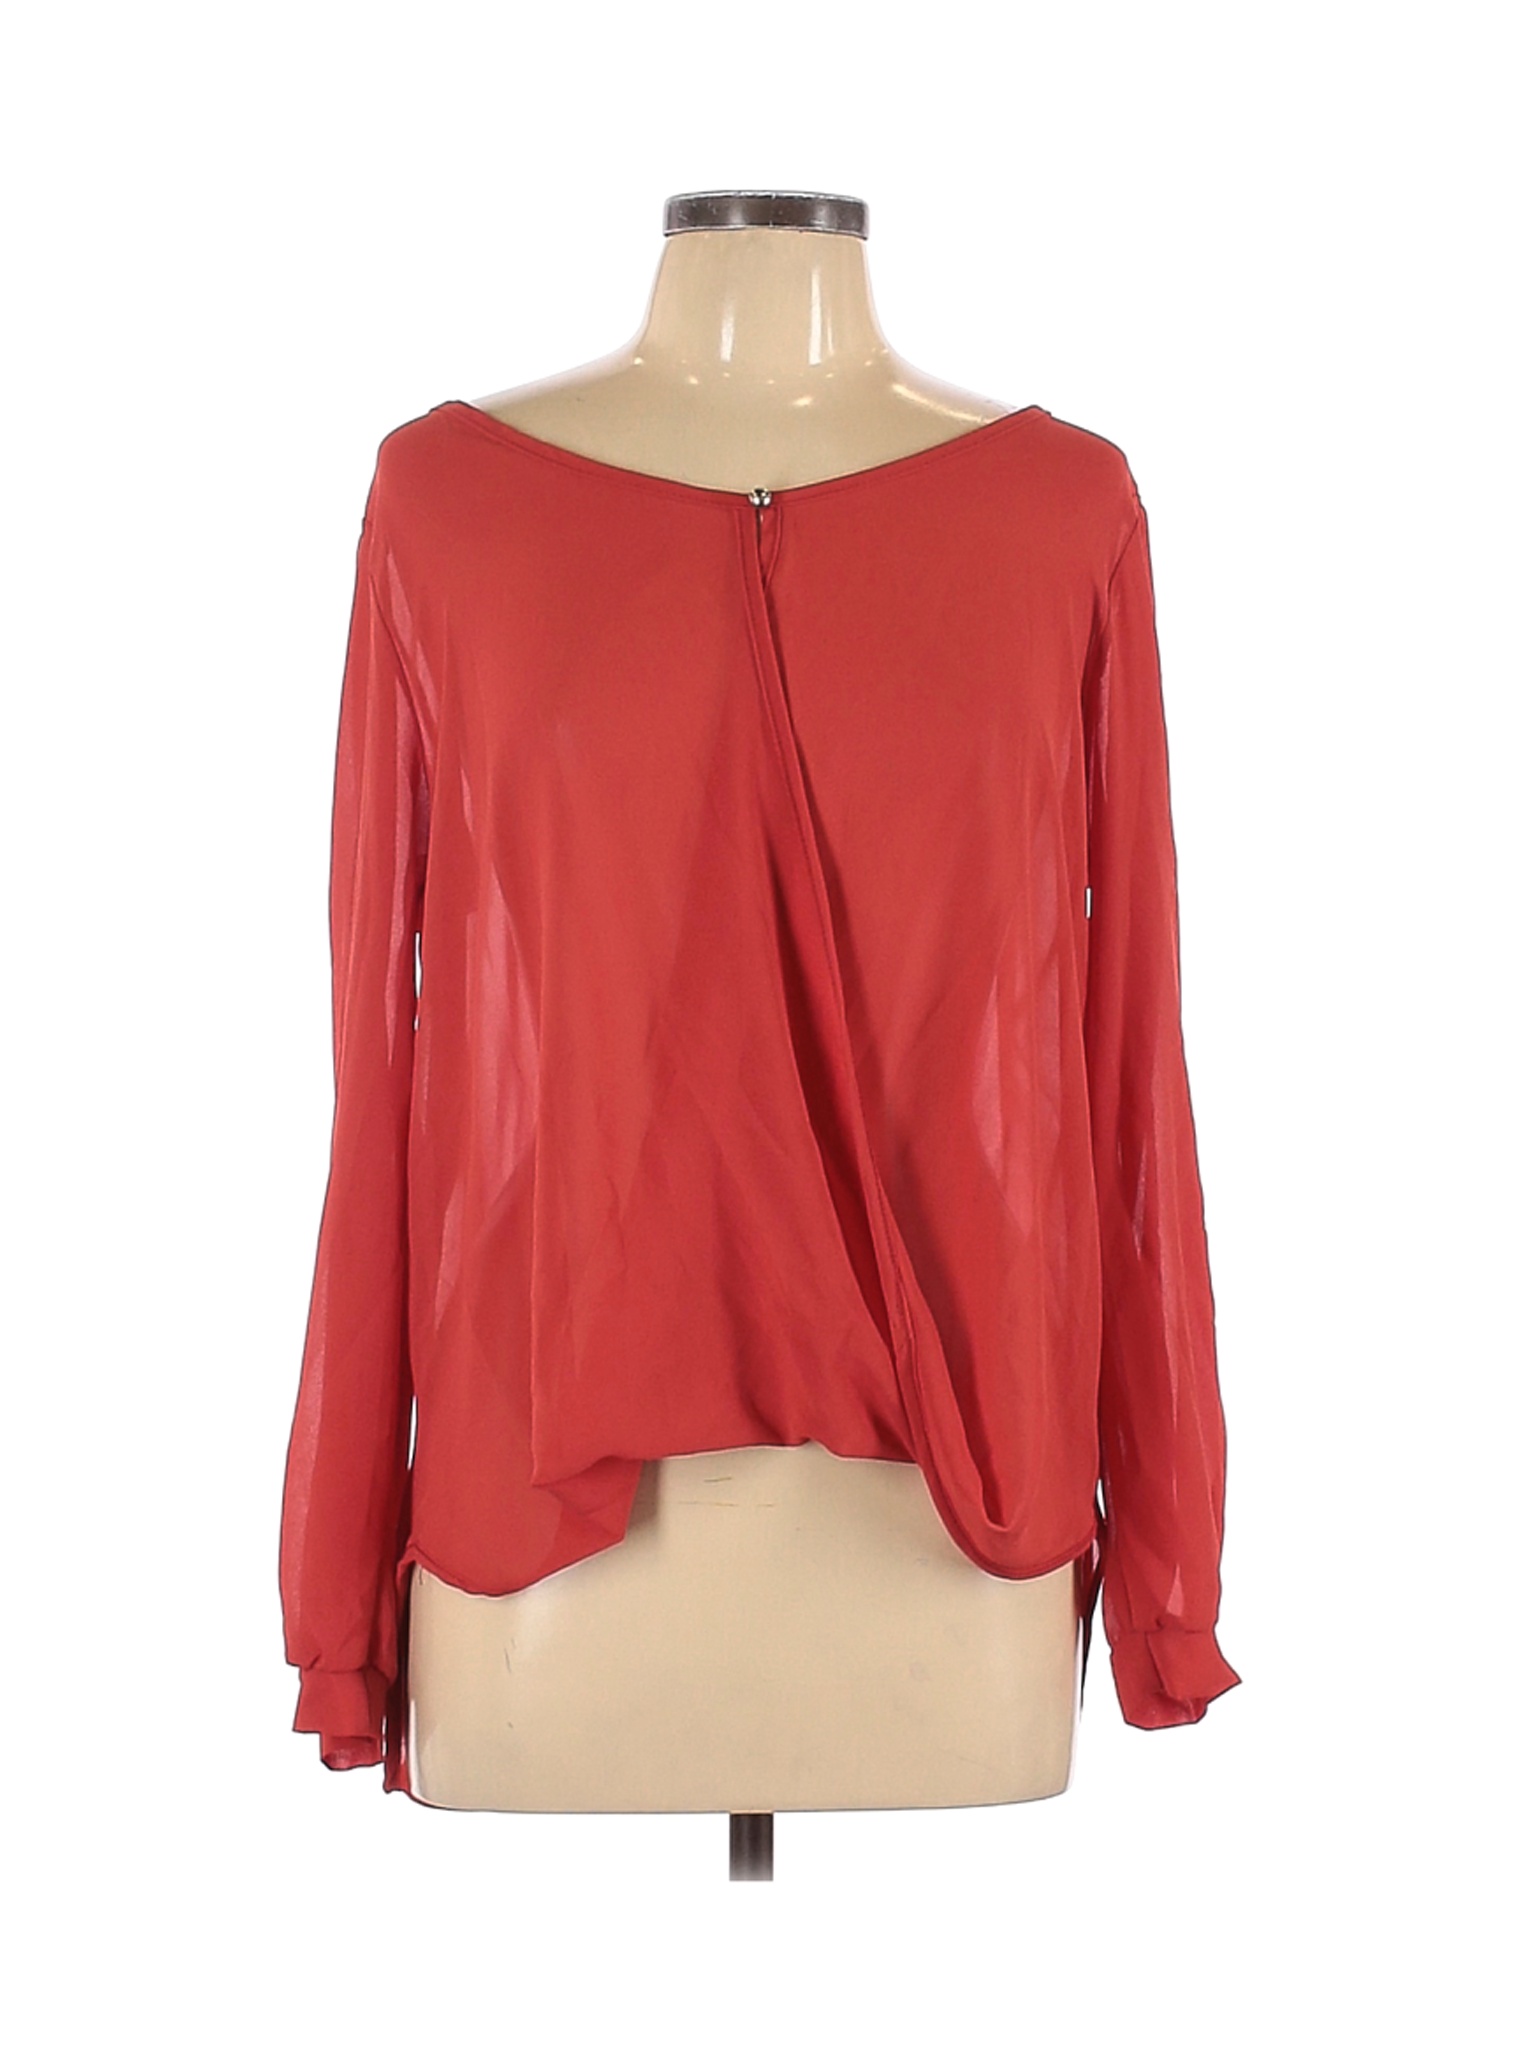 Valentine Women Red Long Sleeve Blouse L | eBay